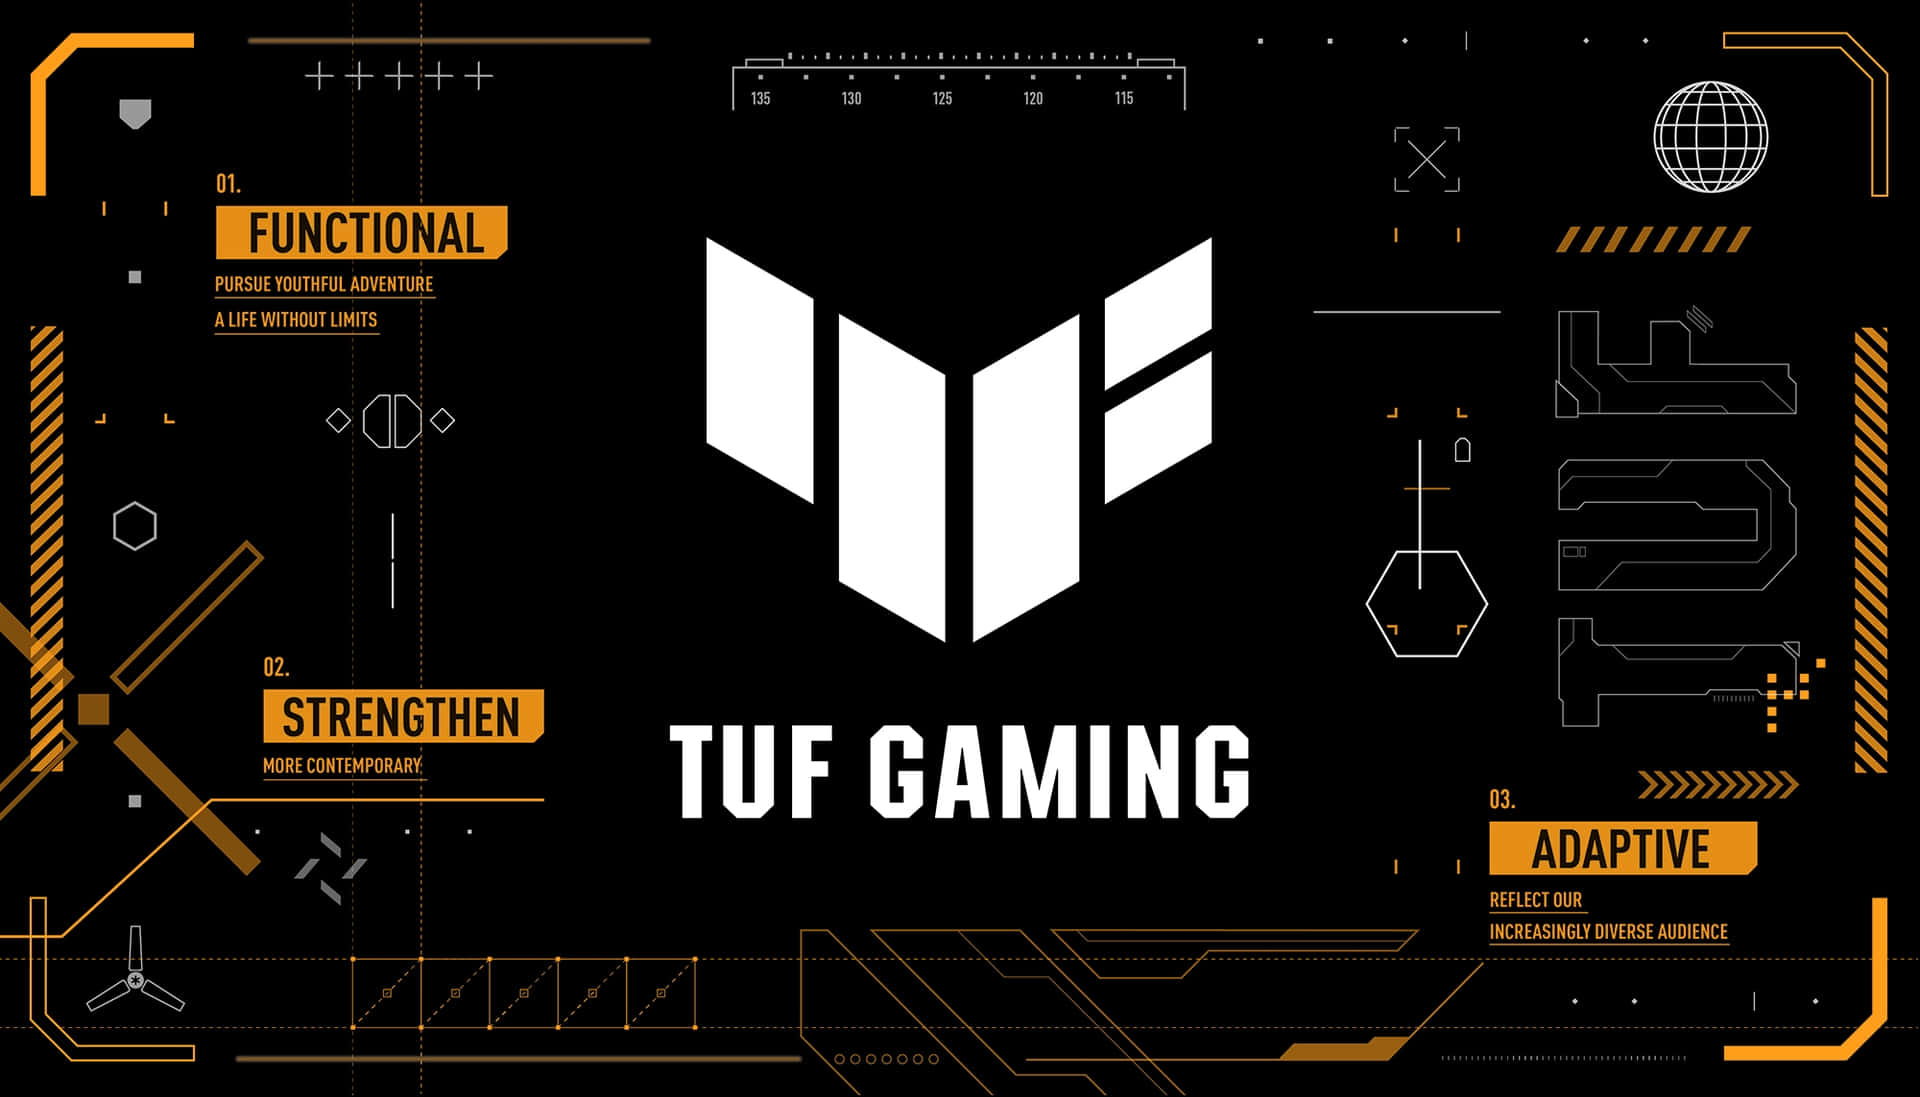 Asus T U F Gaming Brand Graphic Background